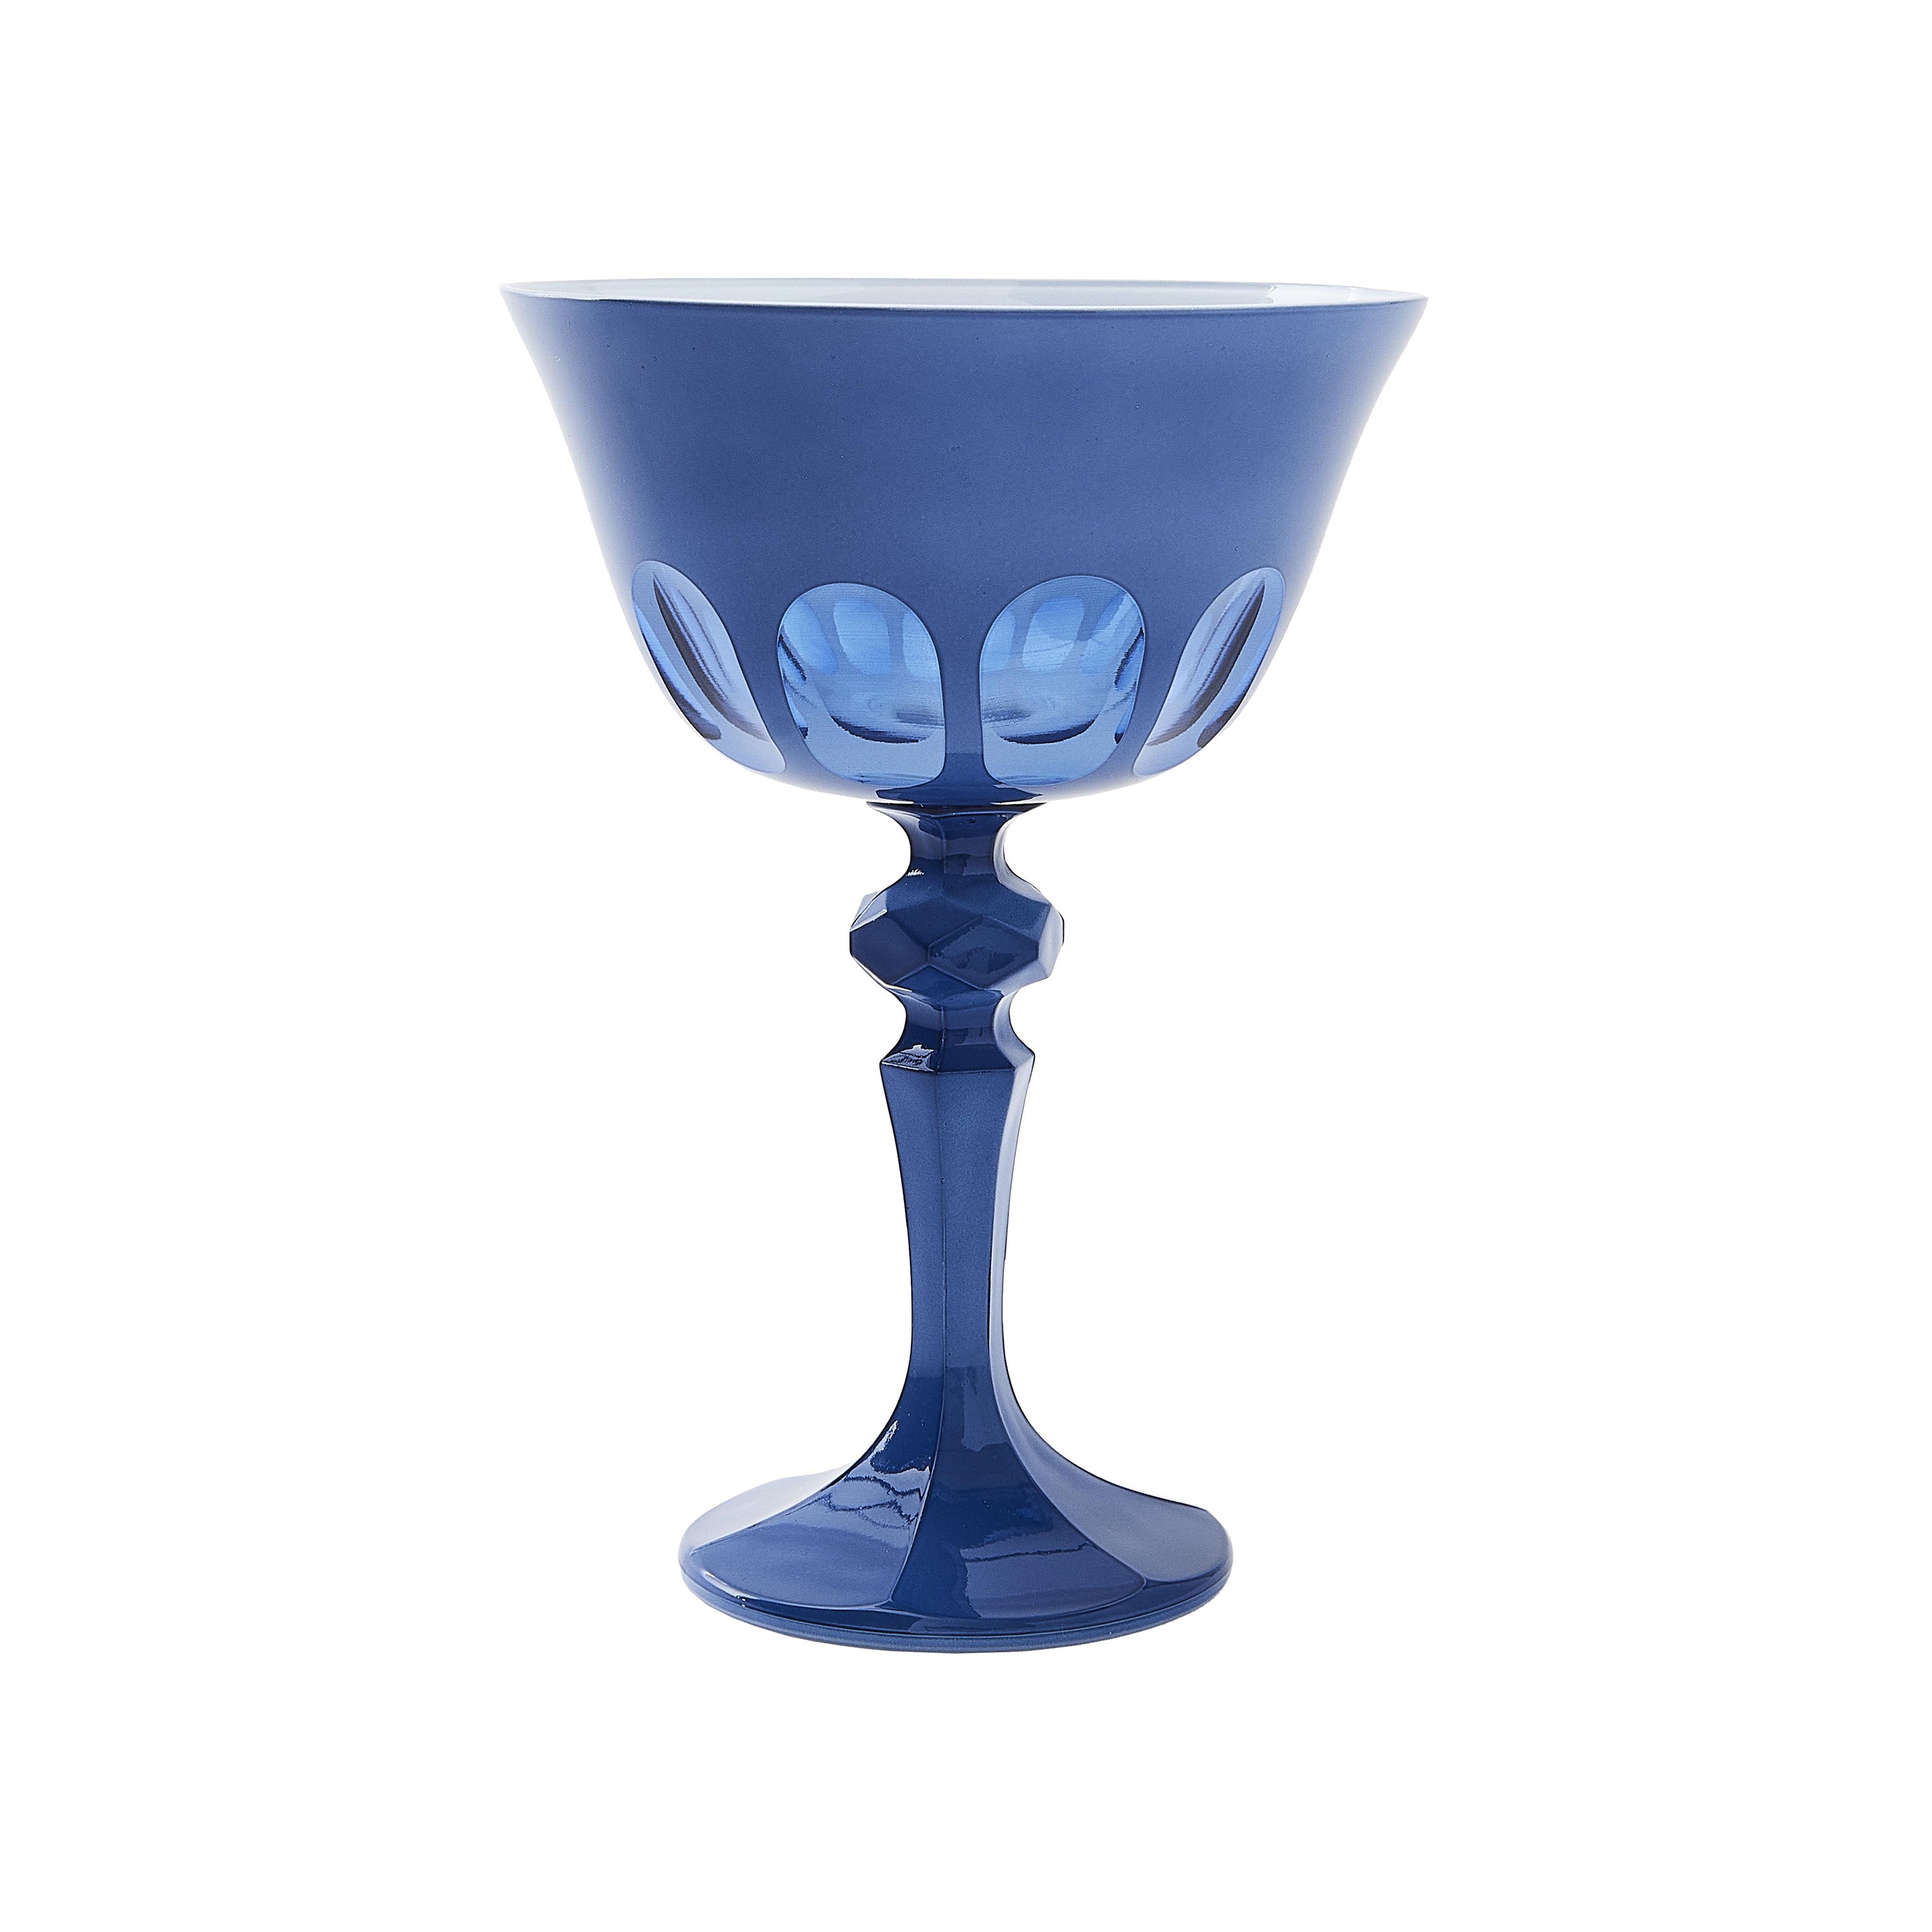 Sir Madam Seeded Glassware Glass (Set of 4) - 2Modern